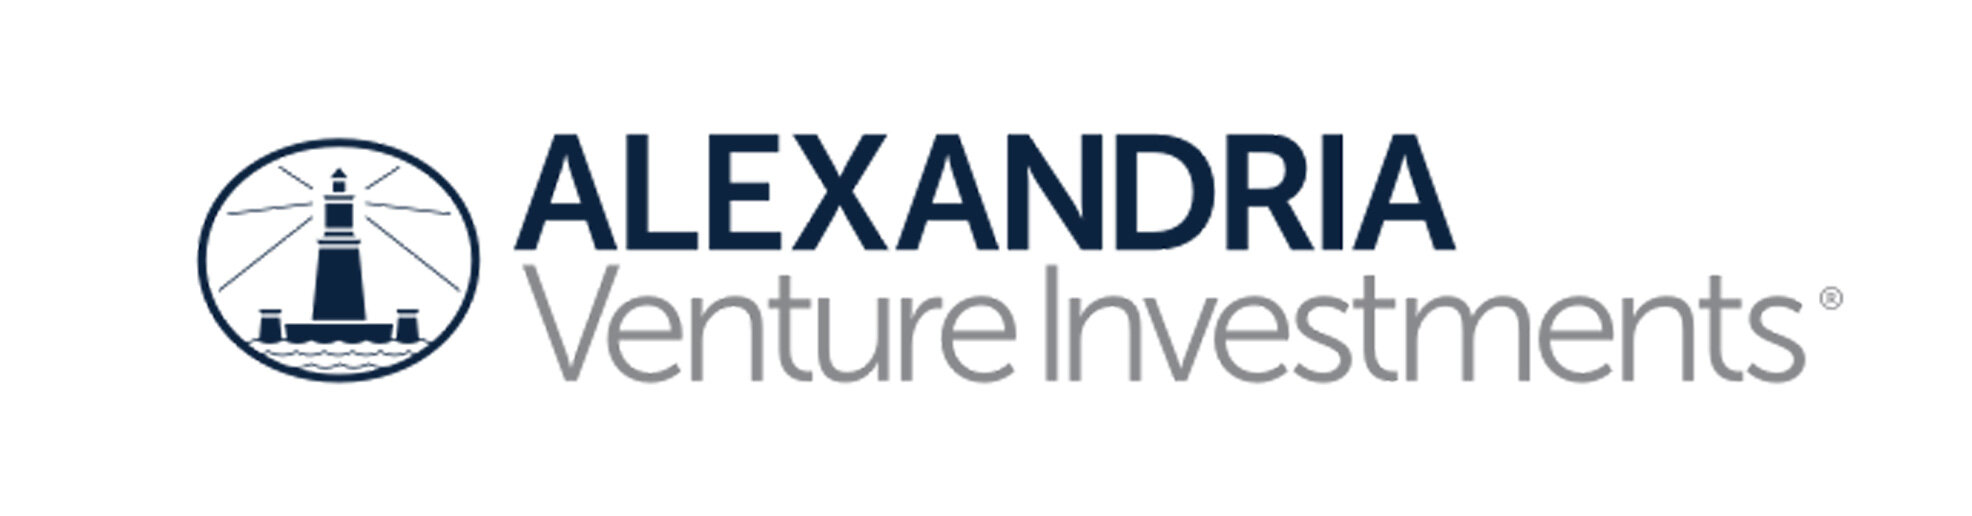 Alexandria Venture Investments (Copy)